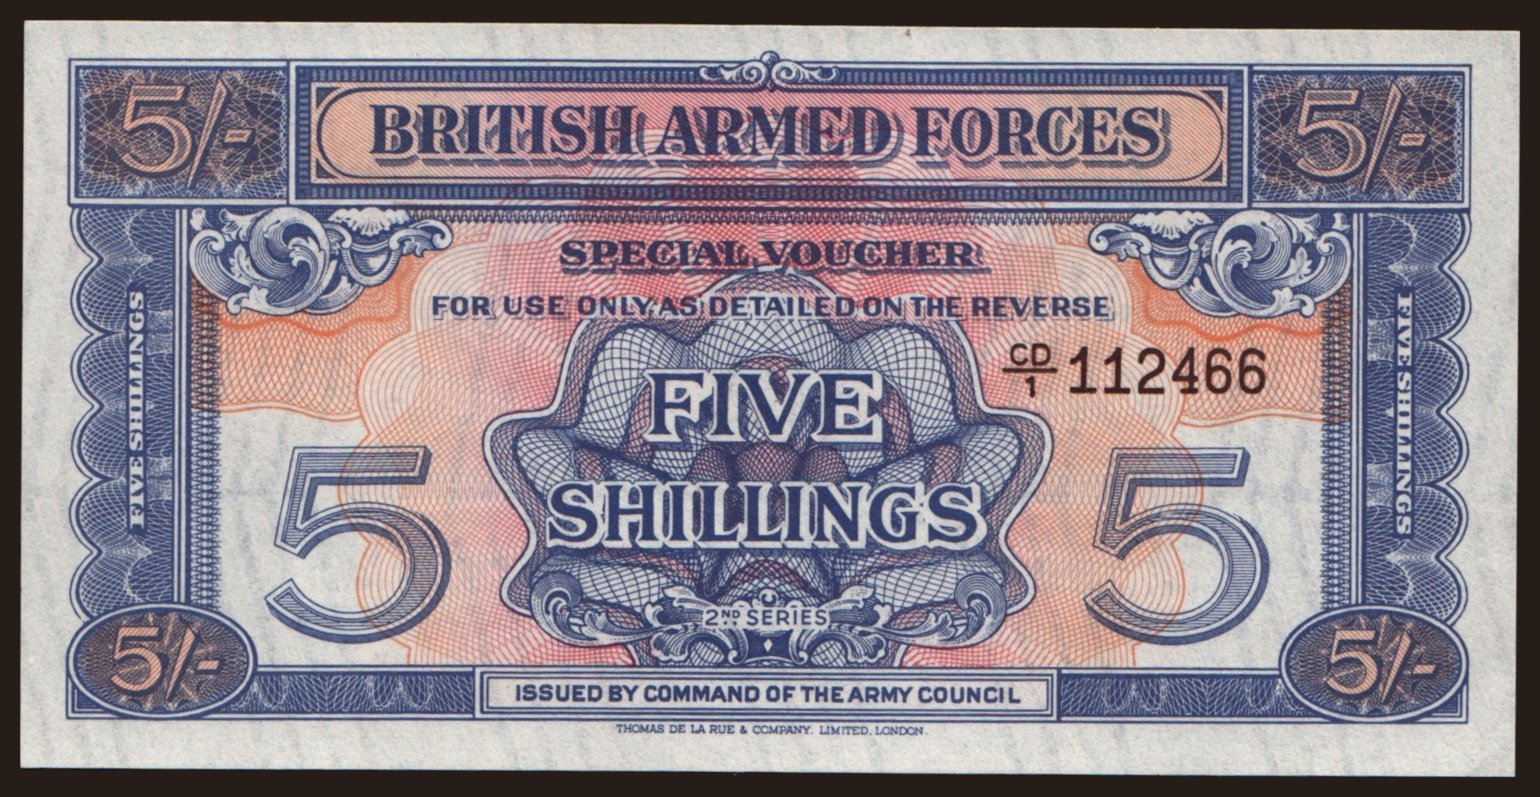 BAF, 5 shillings, 1961